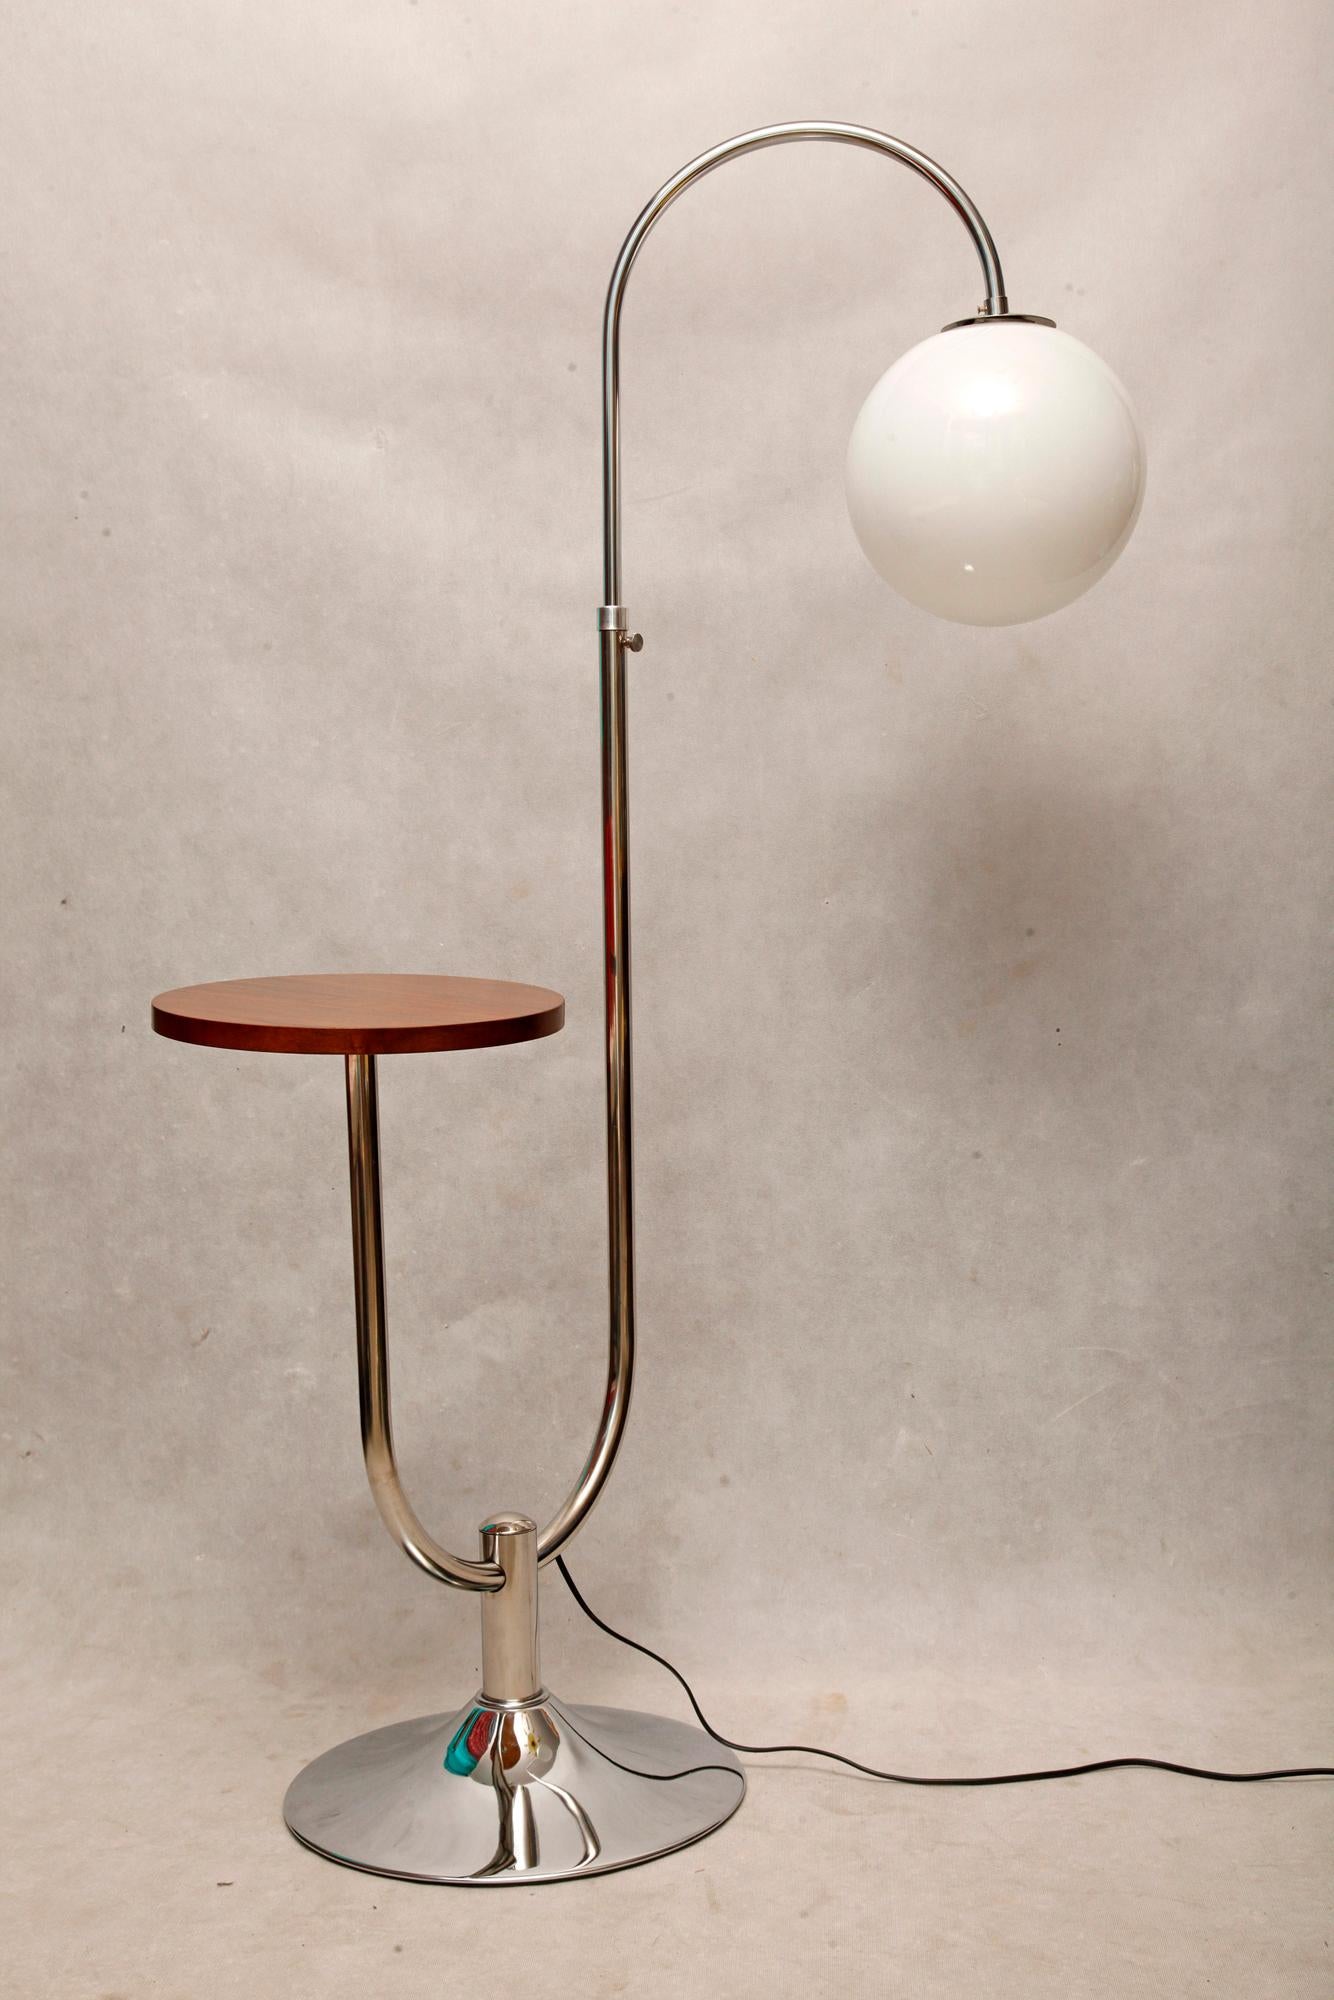 Hand-Crafted Bauhaus Chromed Floor Lamp by Robert Slezak, 1930s